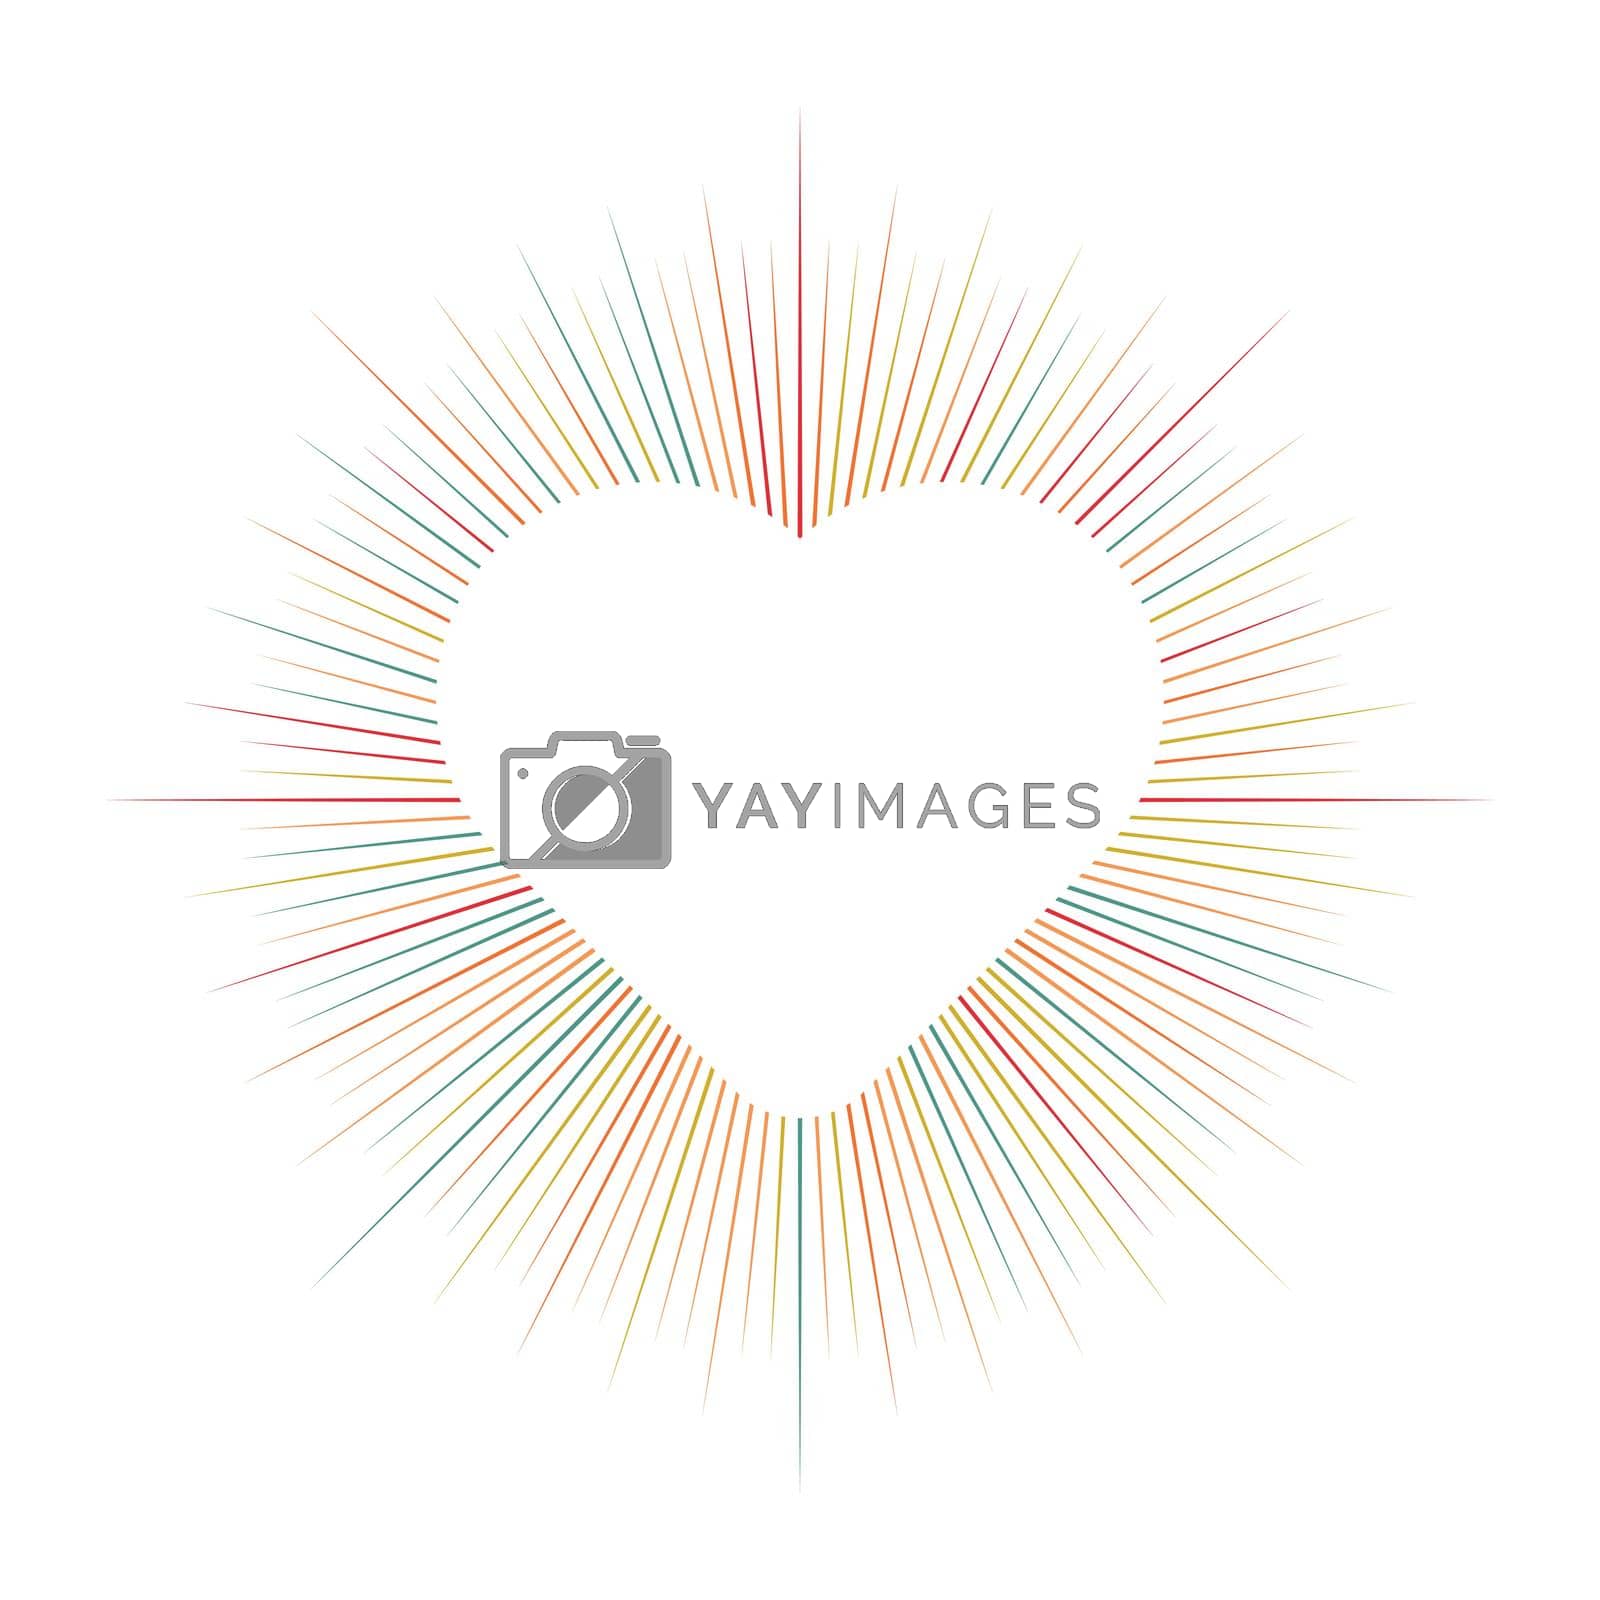 Royalty free image of Shining heart artwork design by Menyoen